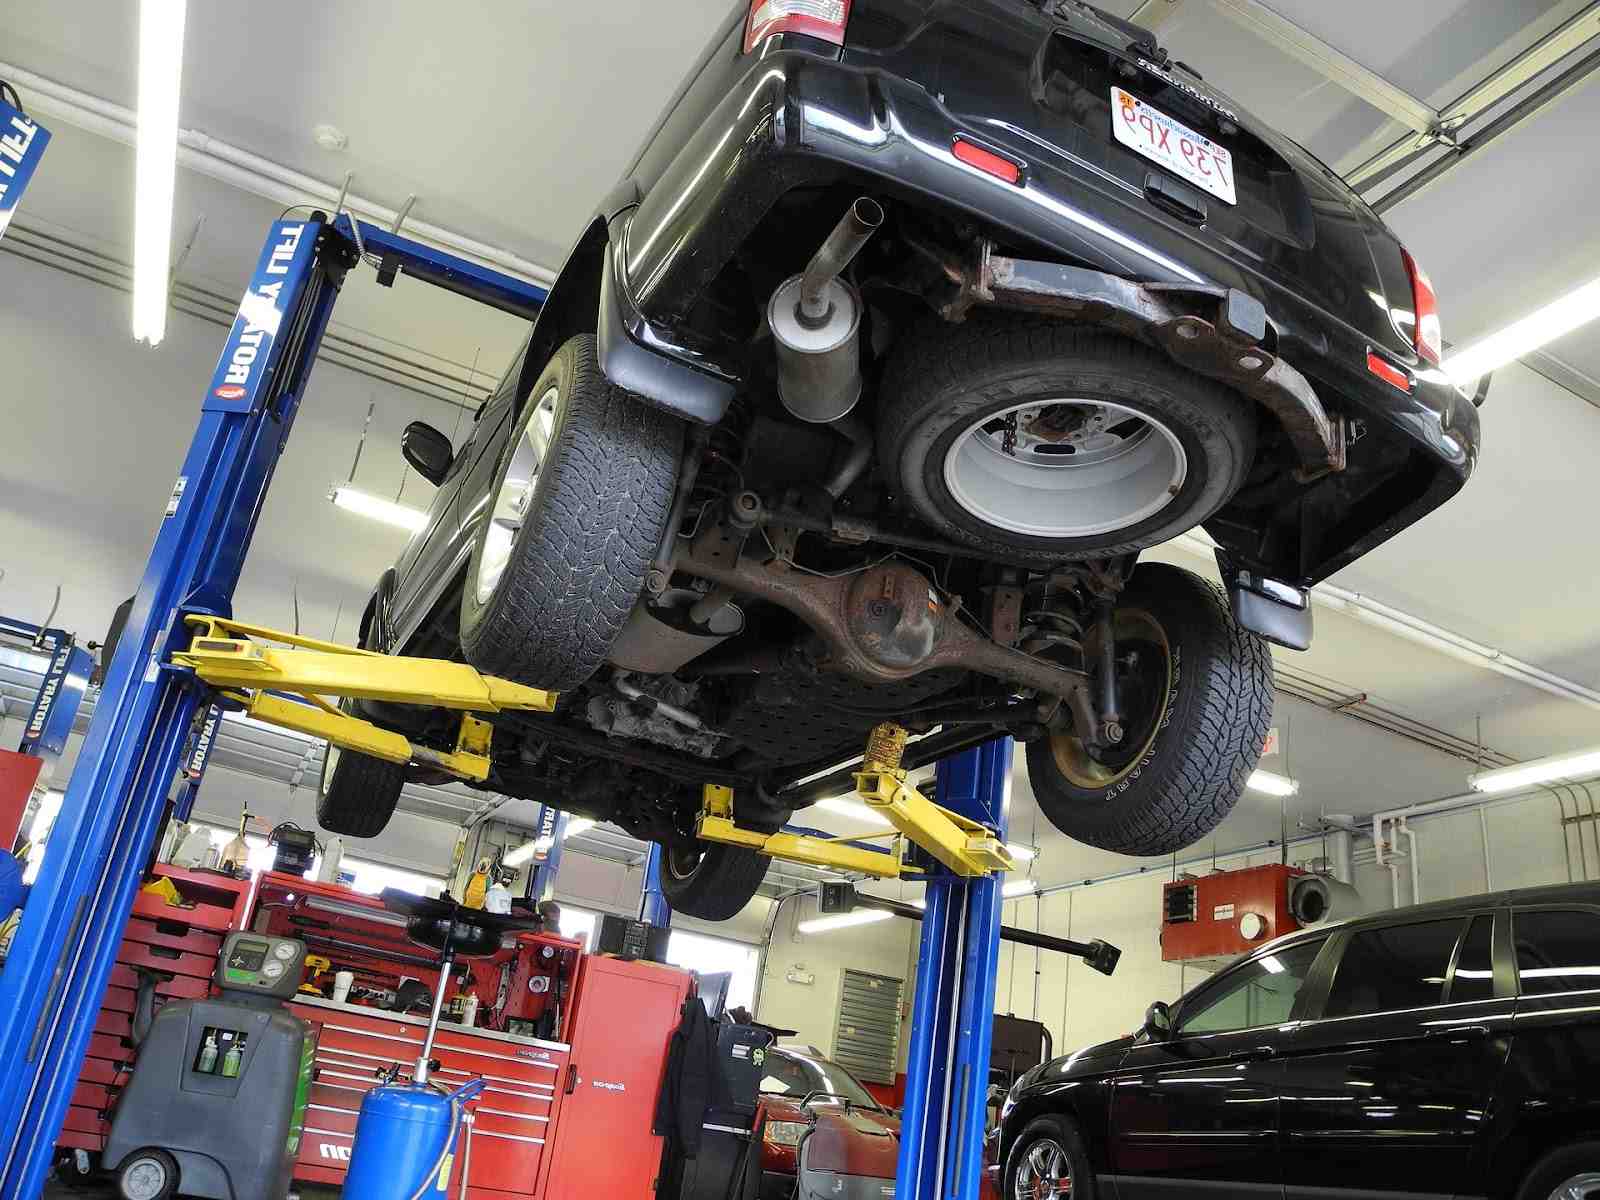 Are car repair prices negotiable?